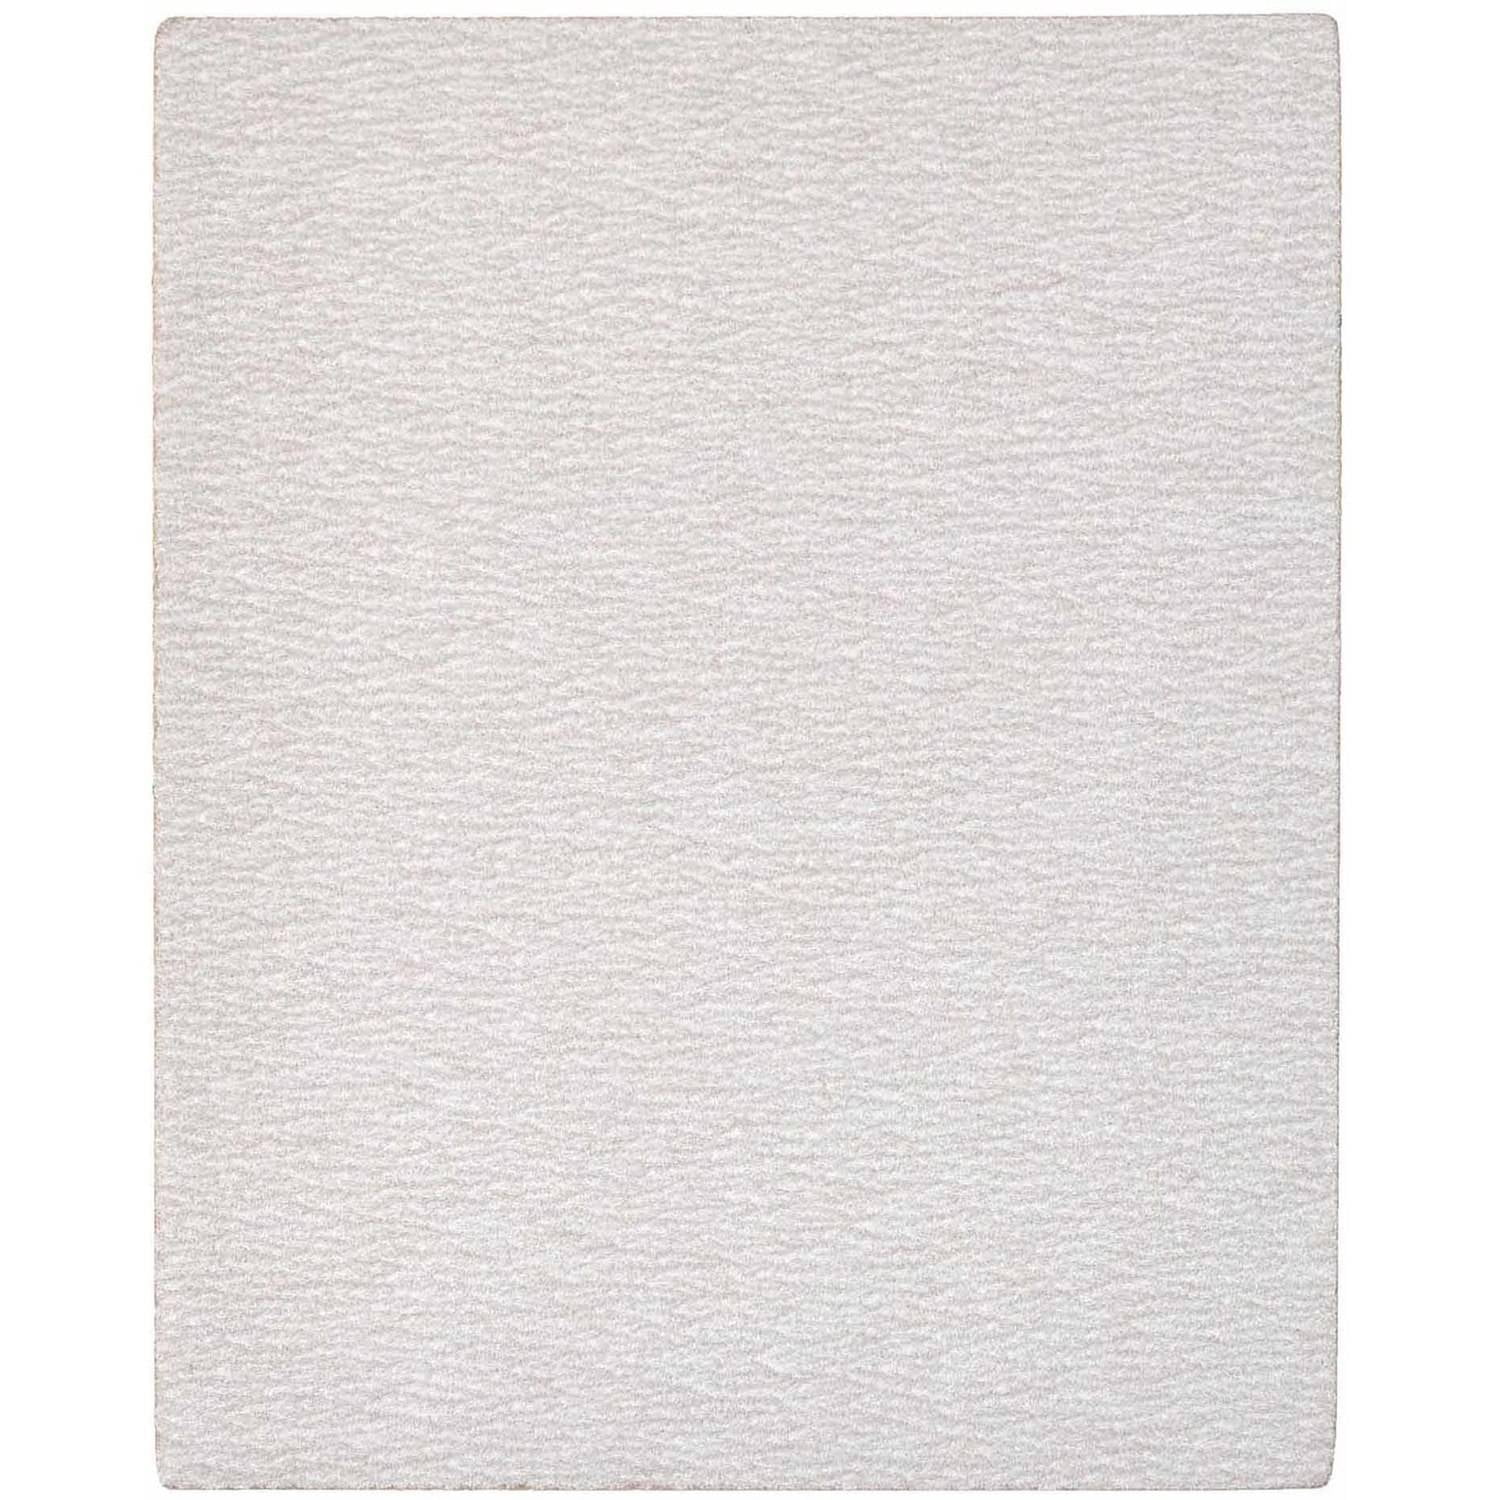 ALEKO 80 Grit Sandpaper Sheets 3.7 x 9 In 10 Pieces Grey Color 